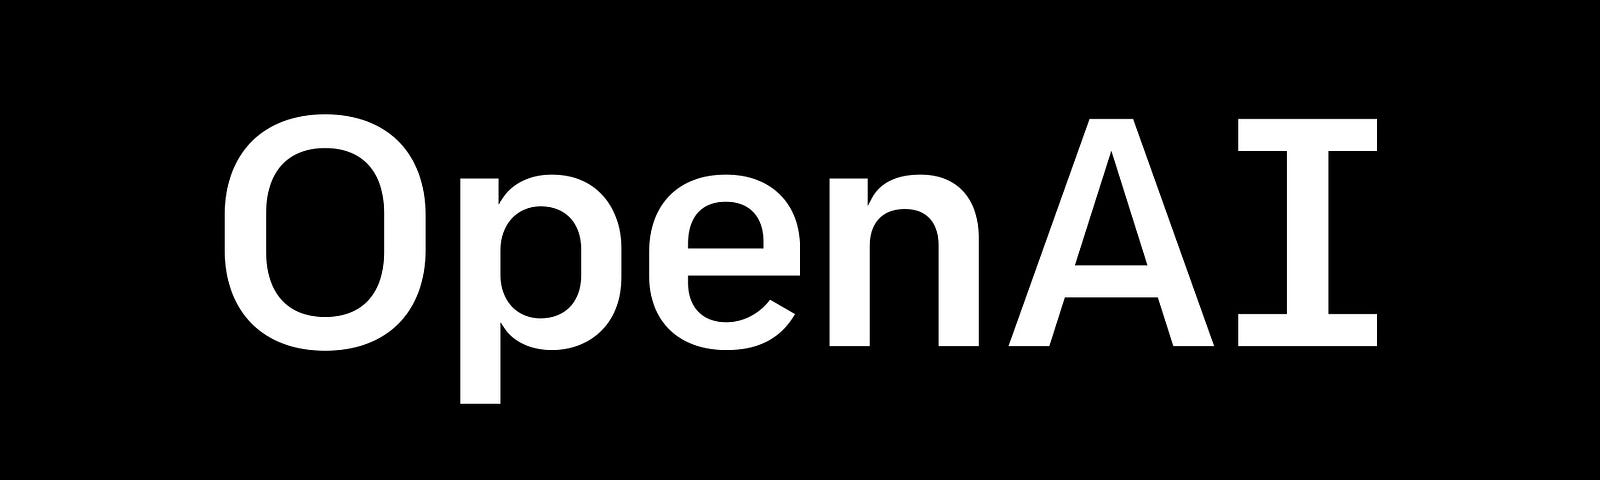 OpenAI company text logo